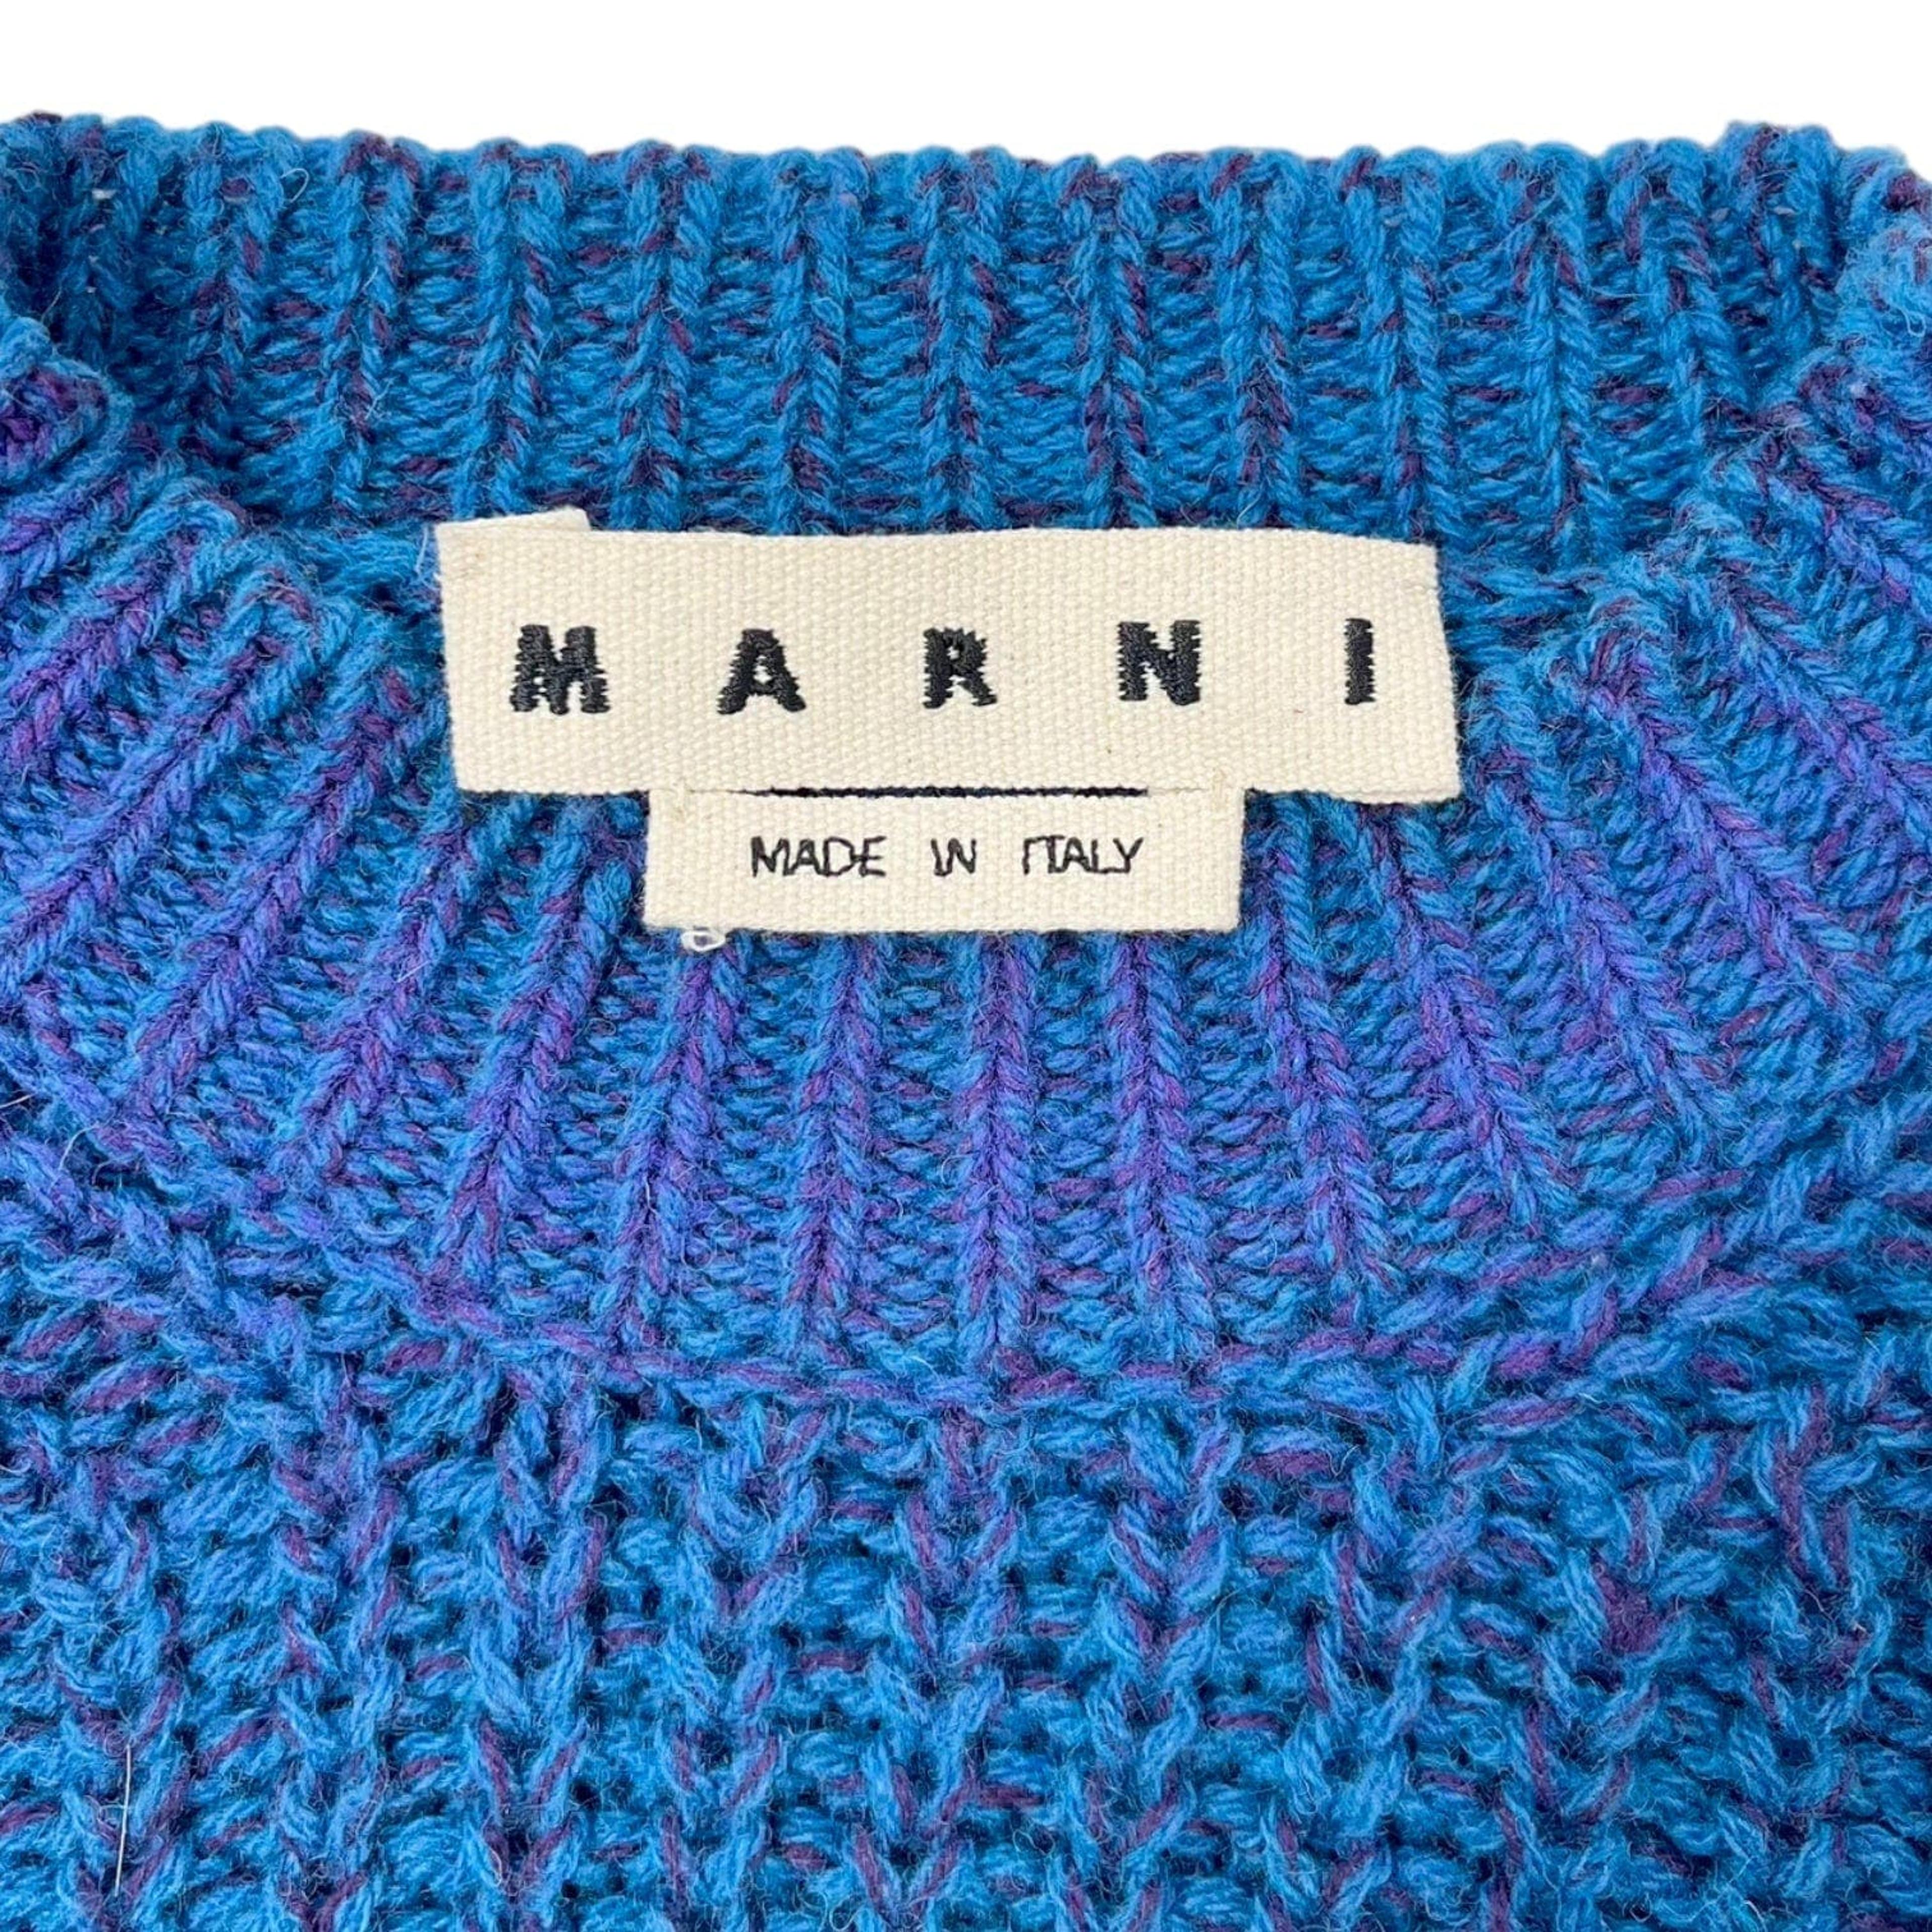 Alternate View 3 of Marni Gradient Effect Knitted Sweatshirt Purple Blue Pre-Owned